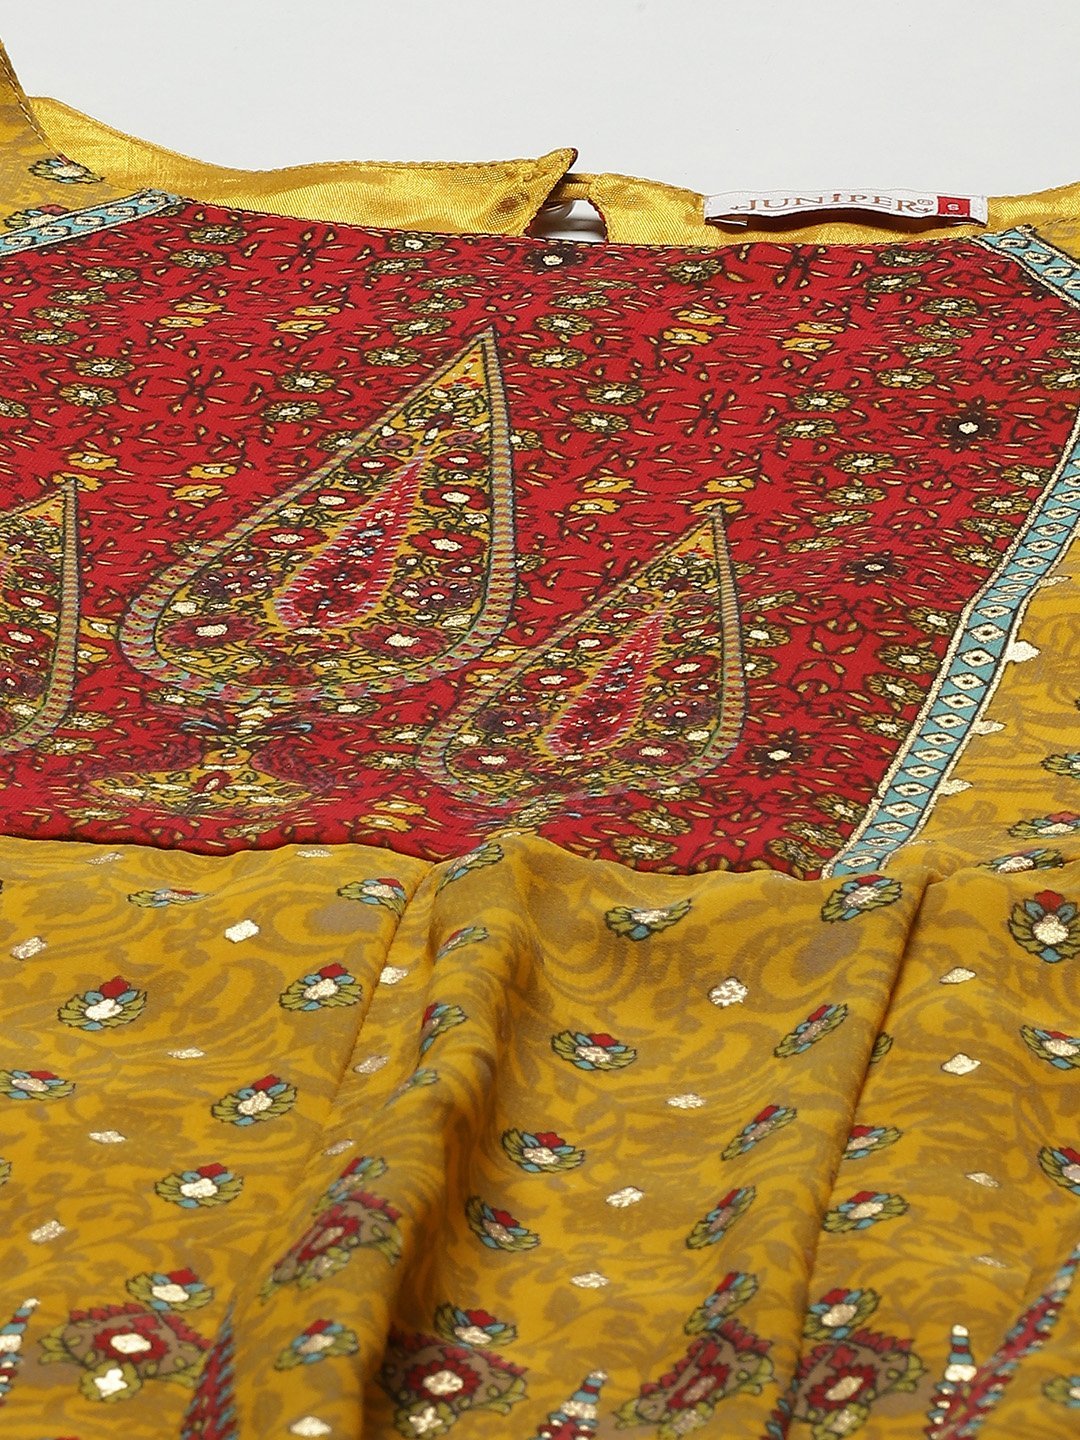 Women's Mustard Georgette Printed Anarkali Dress - Juniper